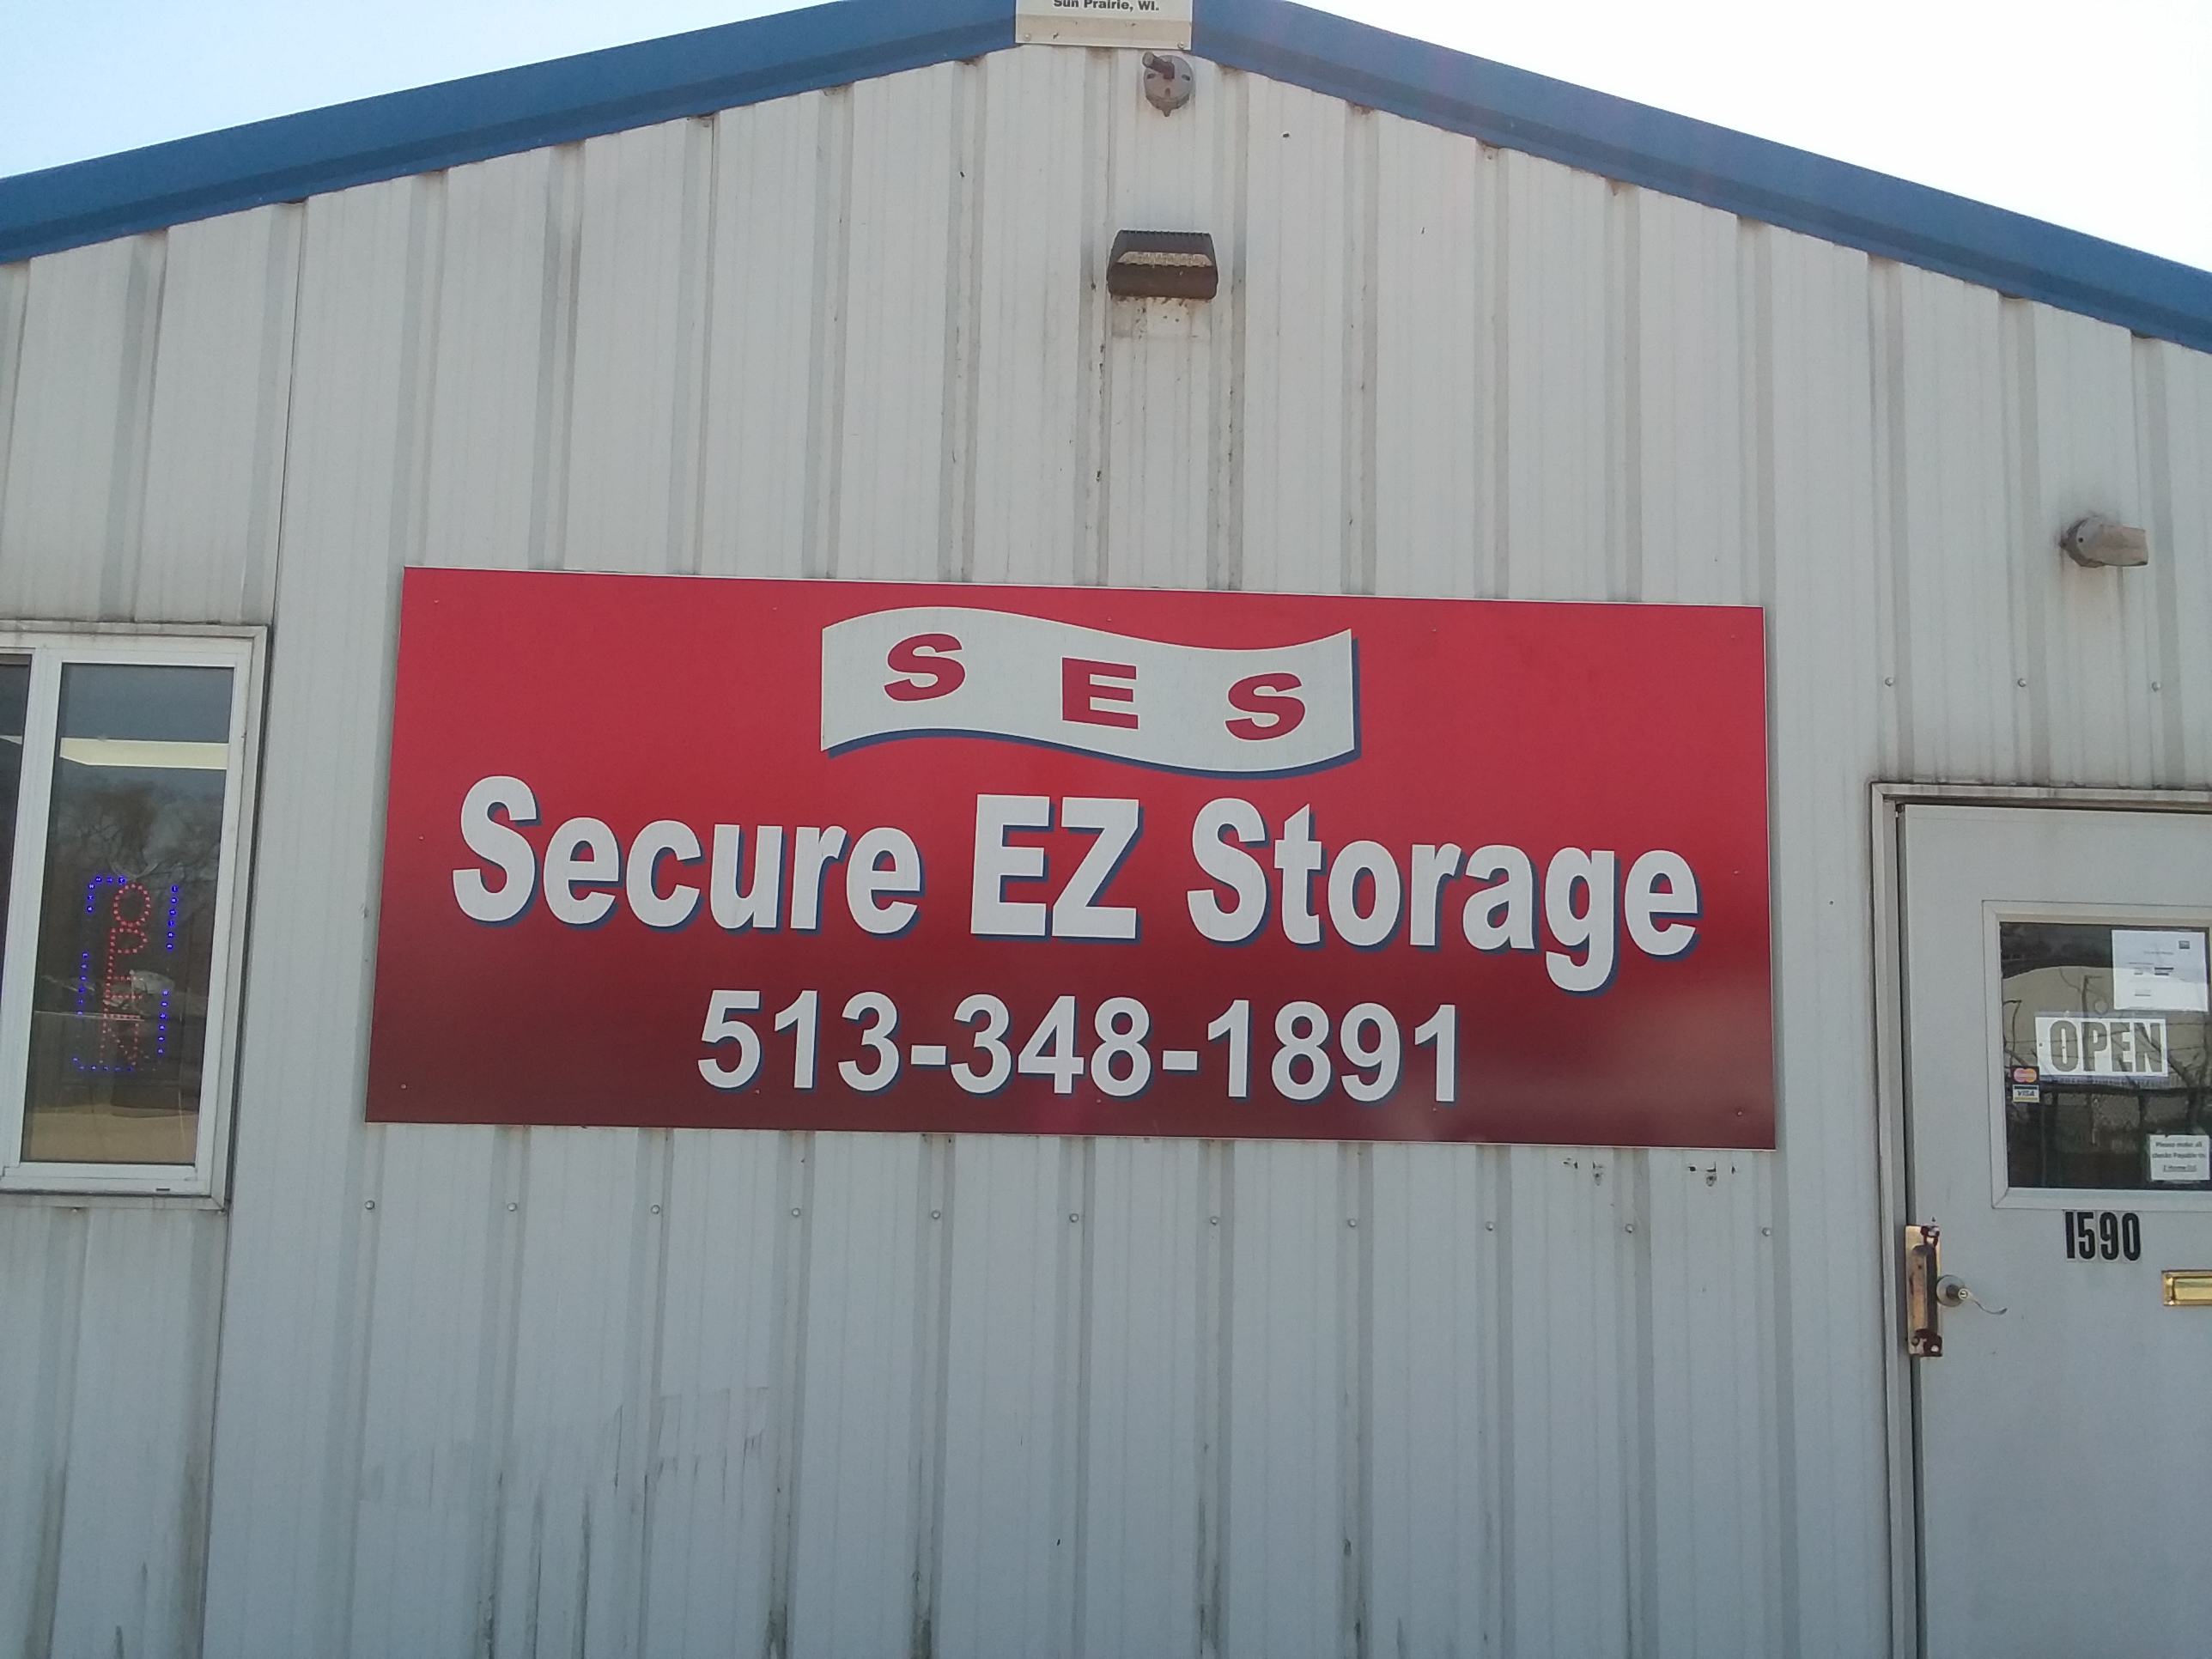 Secure EZ Storage